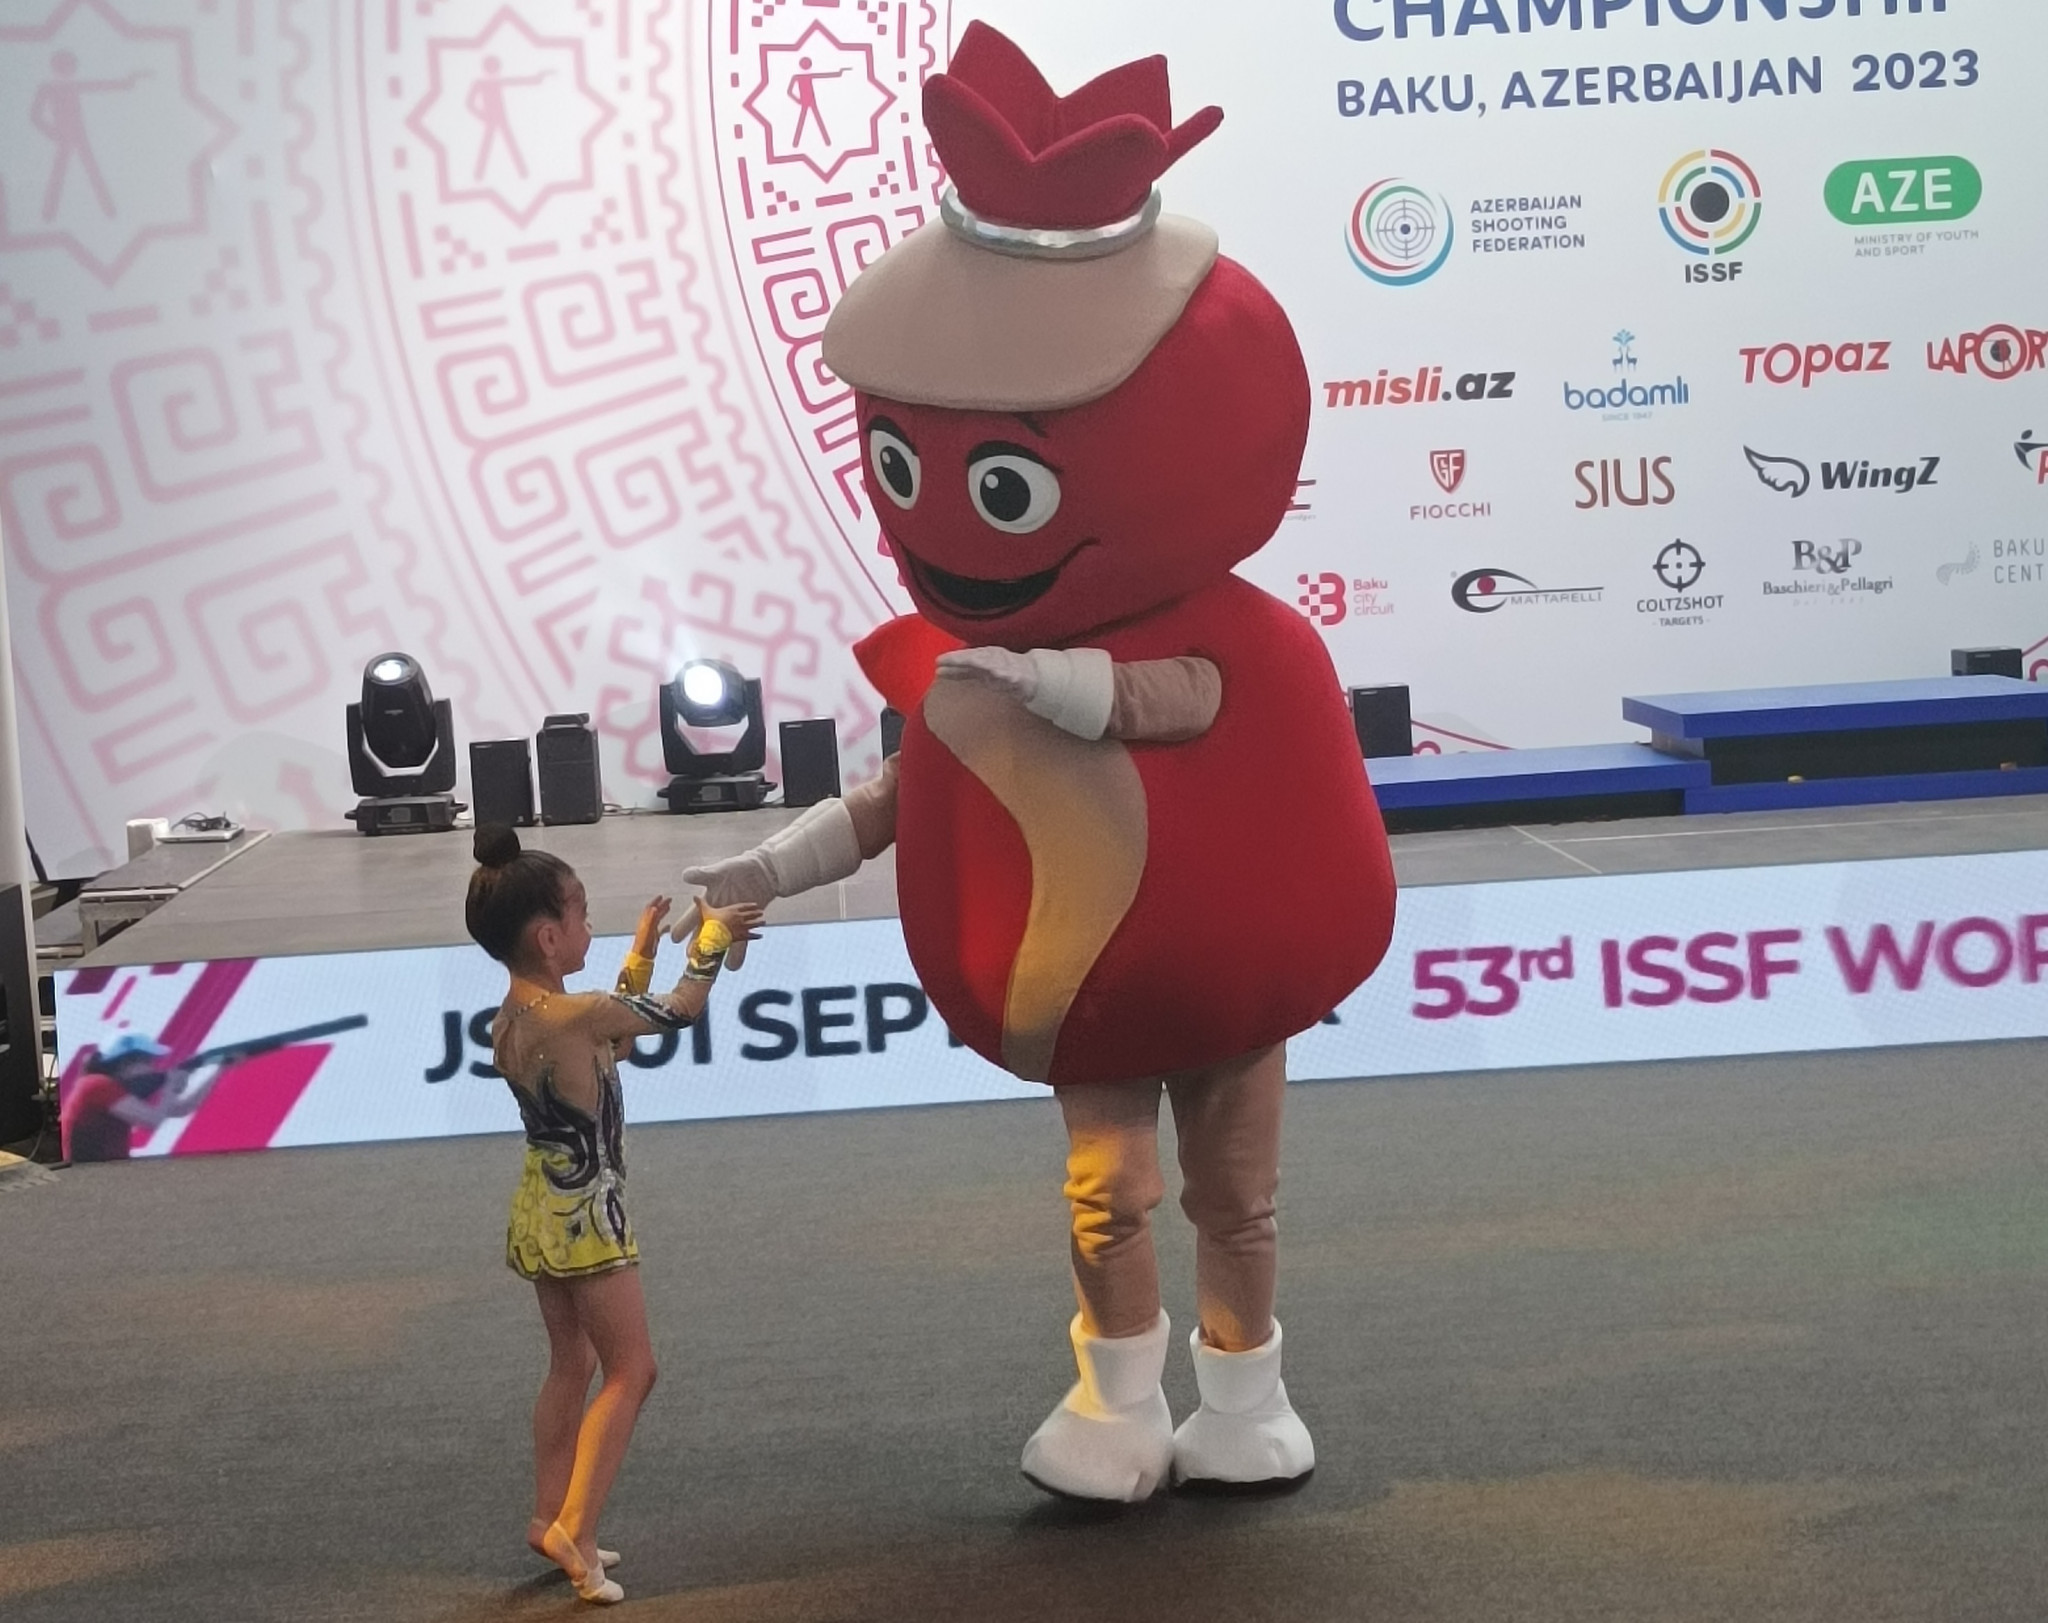 A very young gymnast dances with Baku 2023 mascot Targy ©ITG